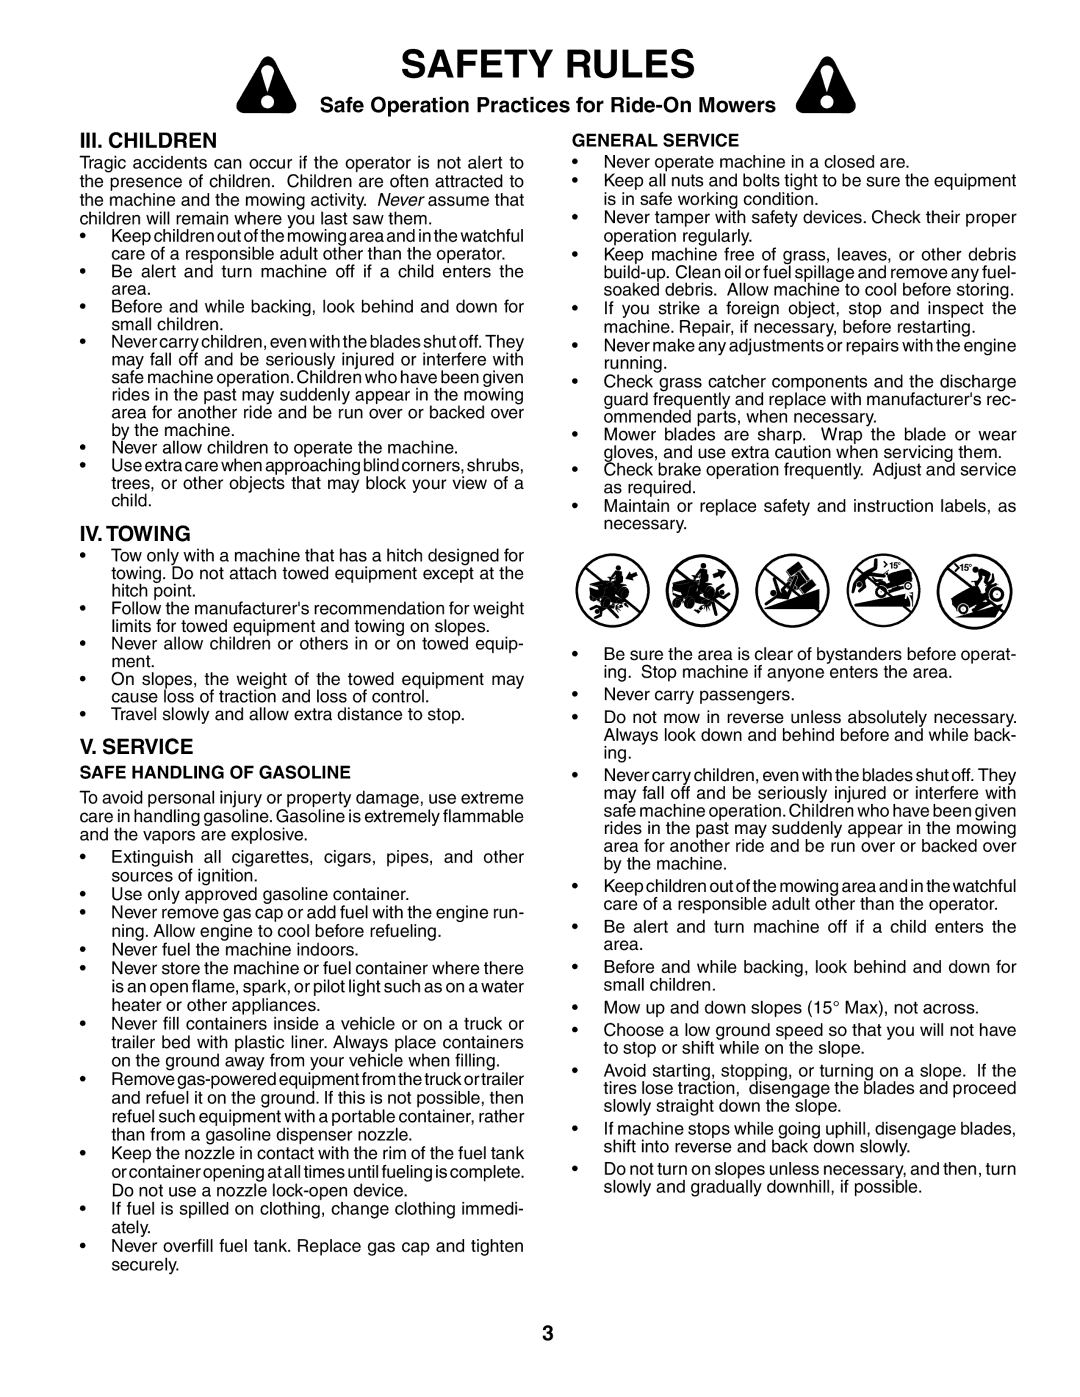 Poulan 197022 manual III. Children, IV. Towing, General Service, Safe Handling of Gasoline 